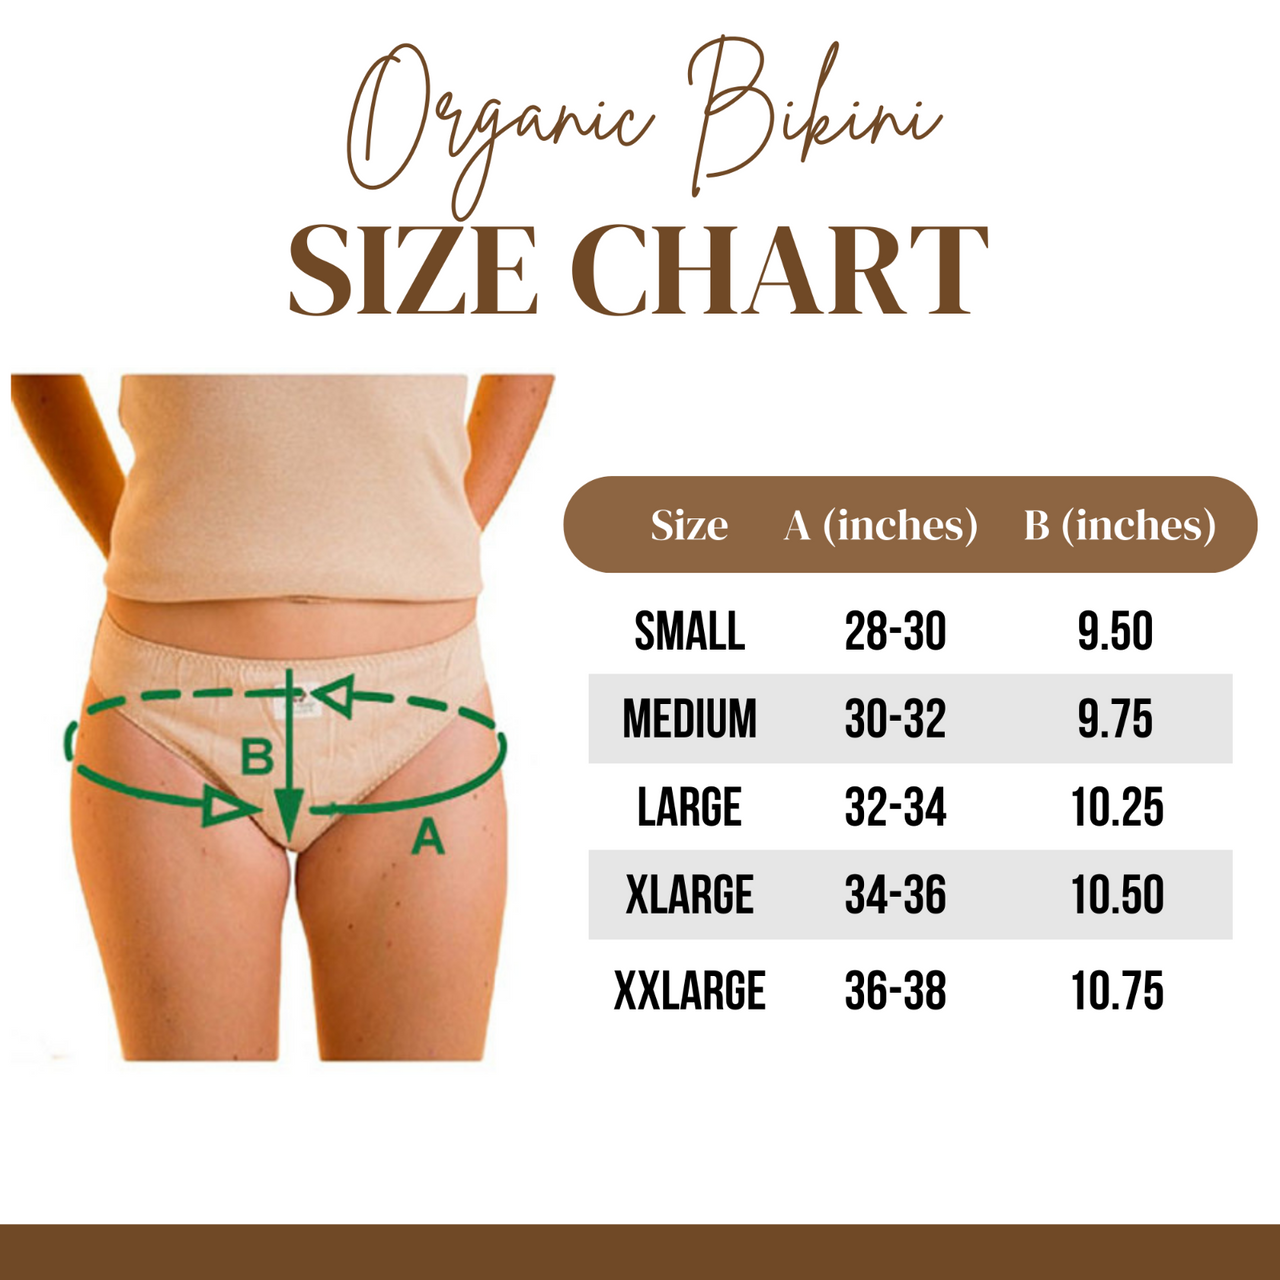 Organic cotton underwear for aware women. B-LIGHT